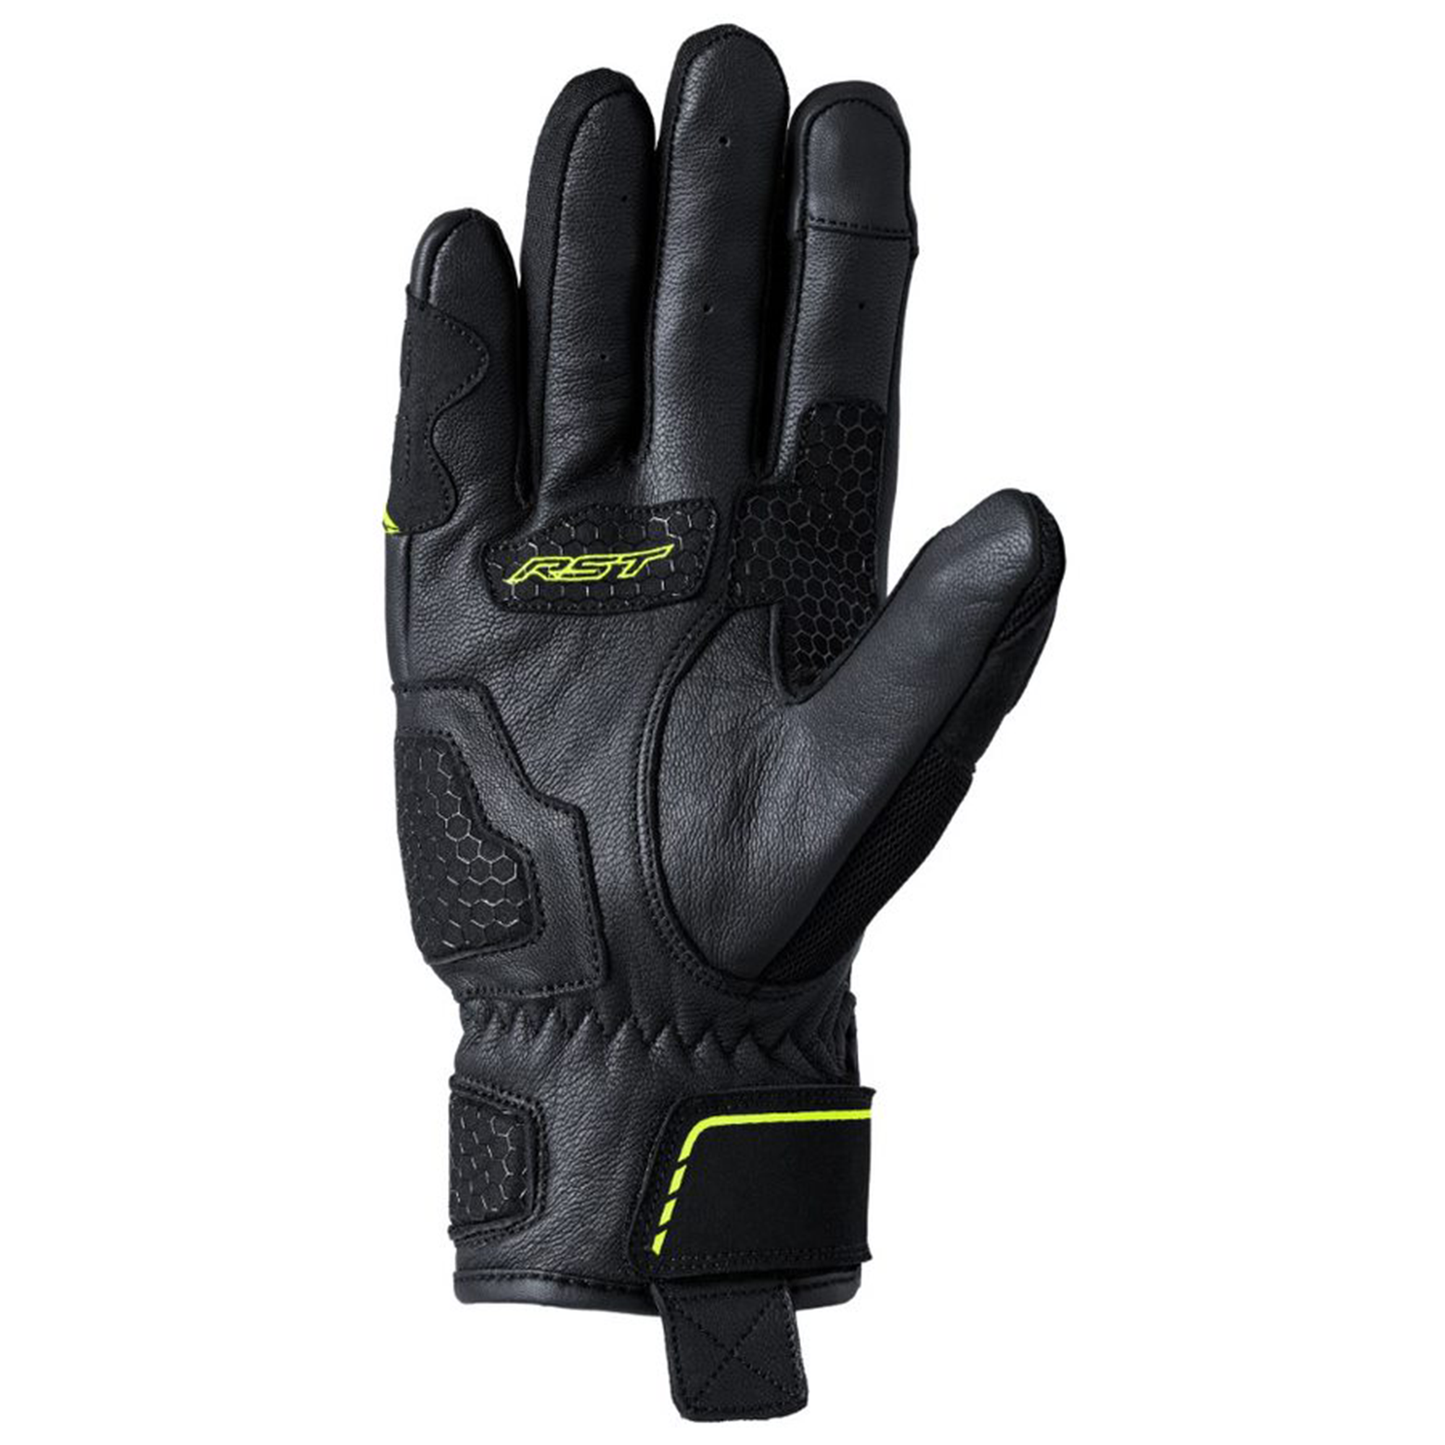 RST S1 Mesh (CE) Gloves - Black/Flo Yellow